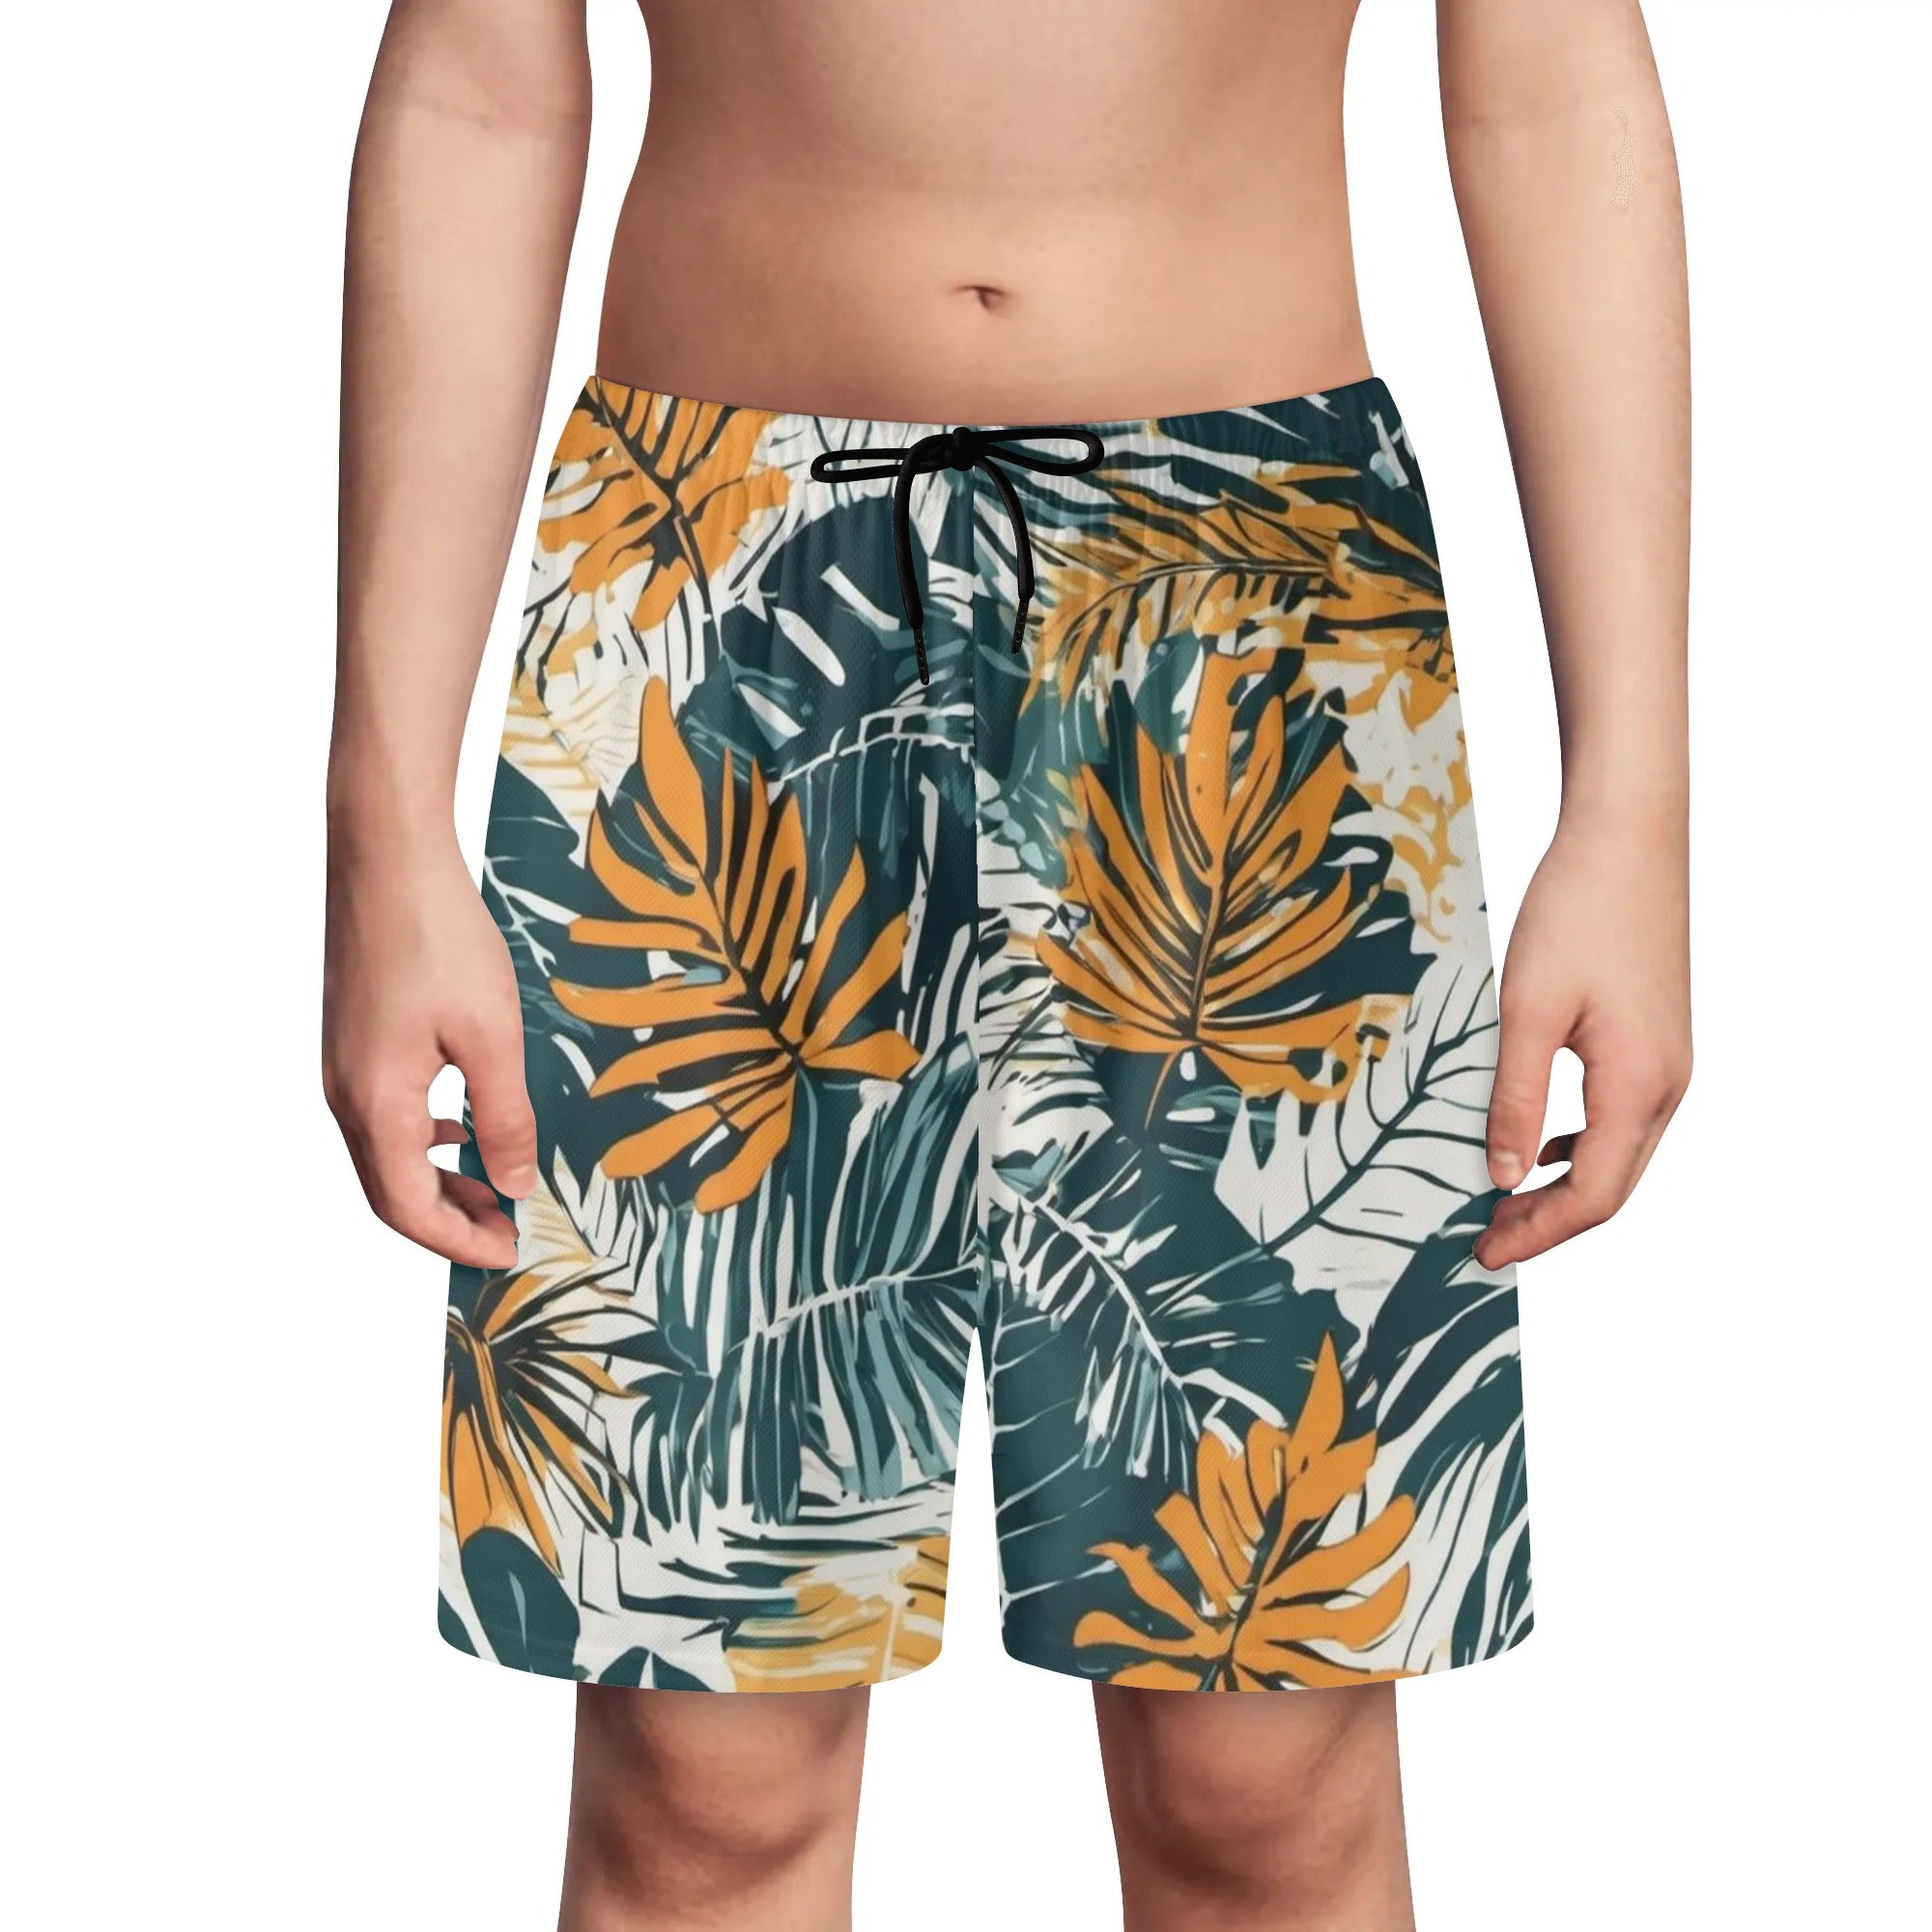 Black String 1 - Jungle Voyage Boys Lightweight Beach Shorts - boys beach shorts at TFC&H Co.